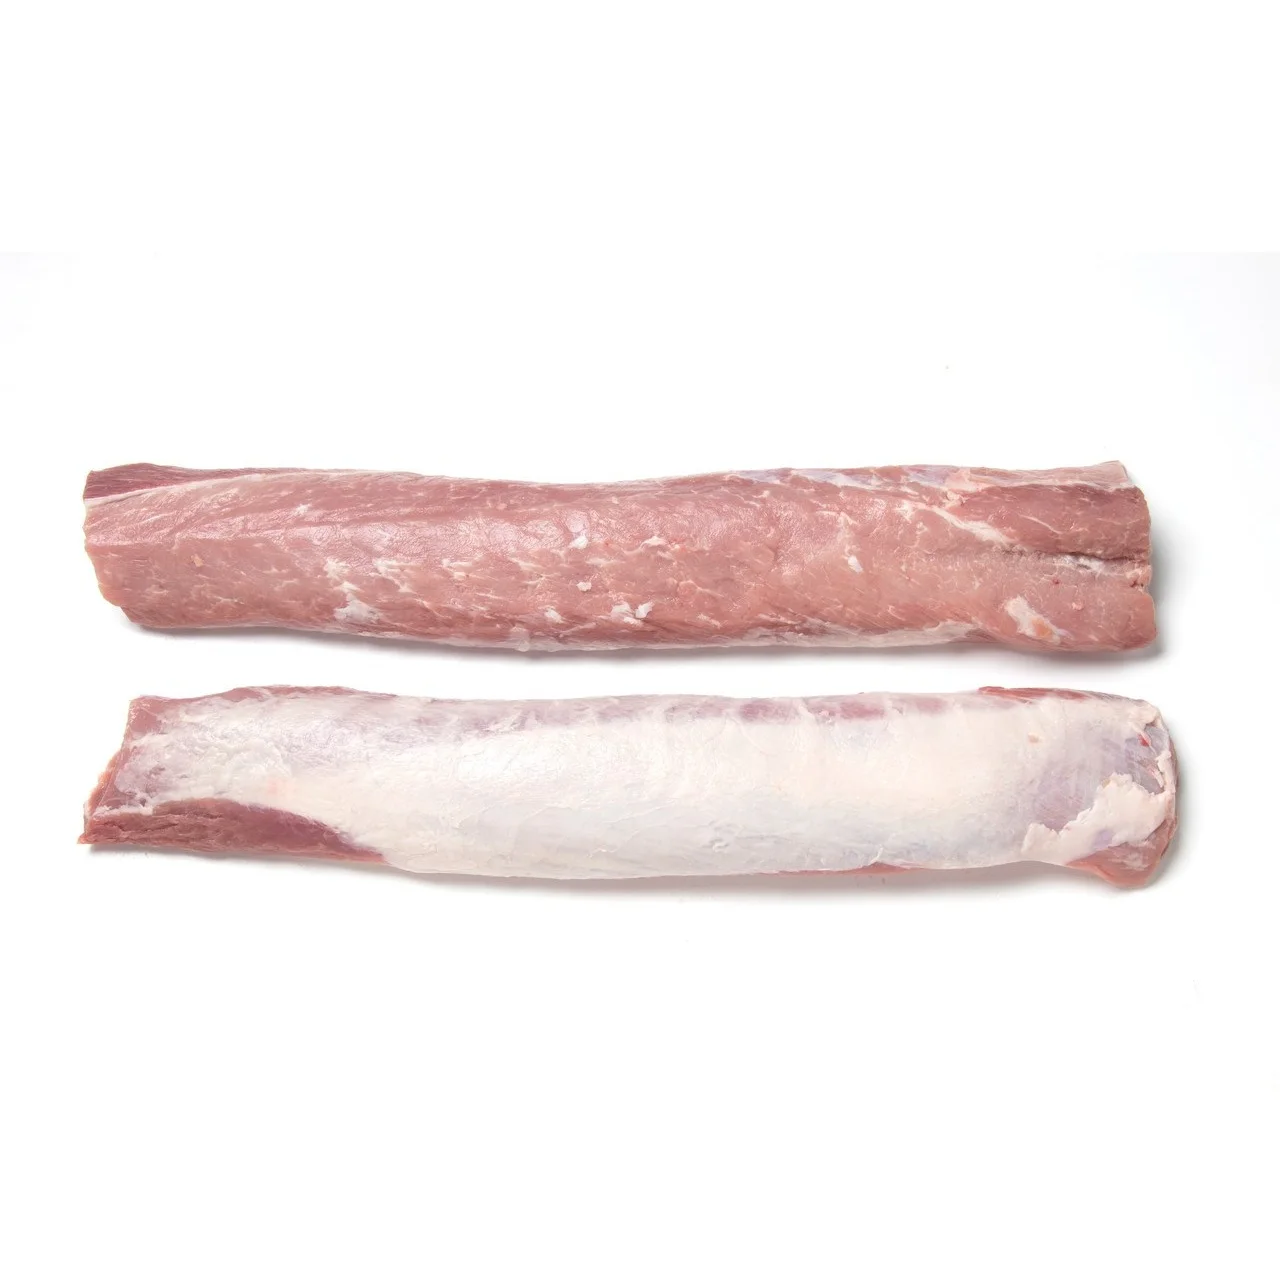 Wholesale Price Direct Supplier Frozen Fresh Pork Boneless Tenderloin Best Grade Premium Quality Pig Boneless Tenderloin